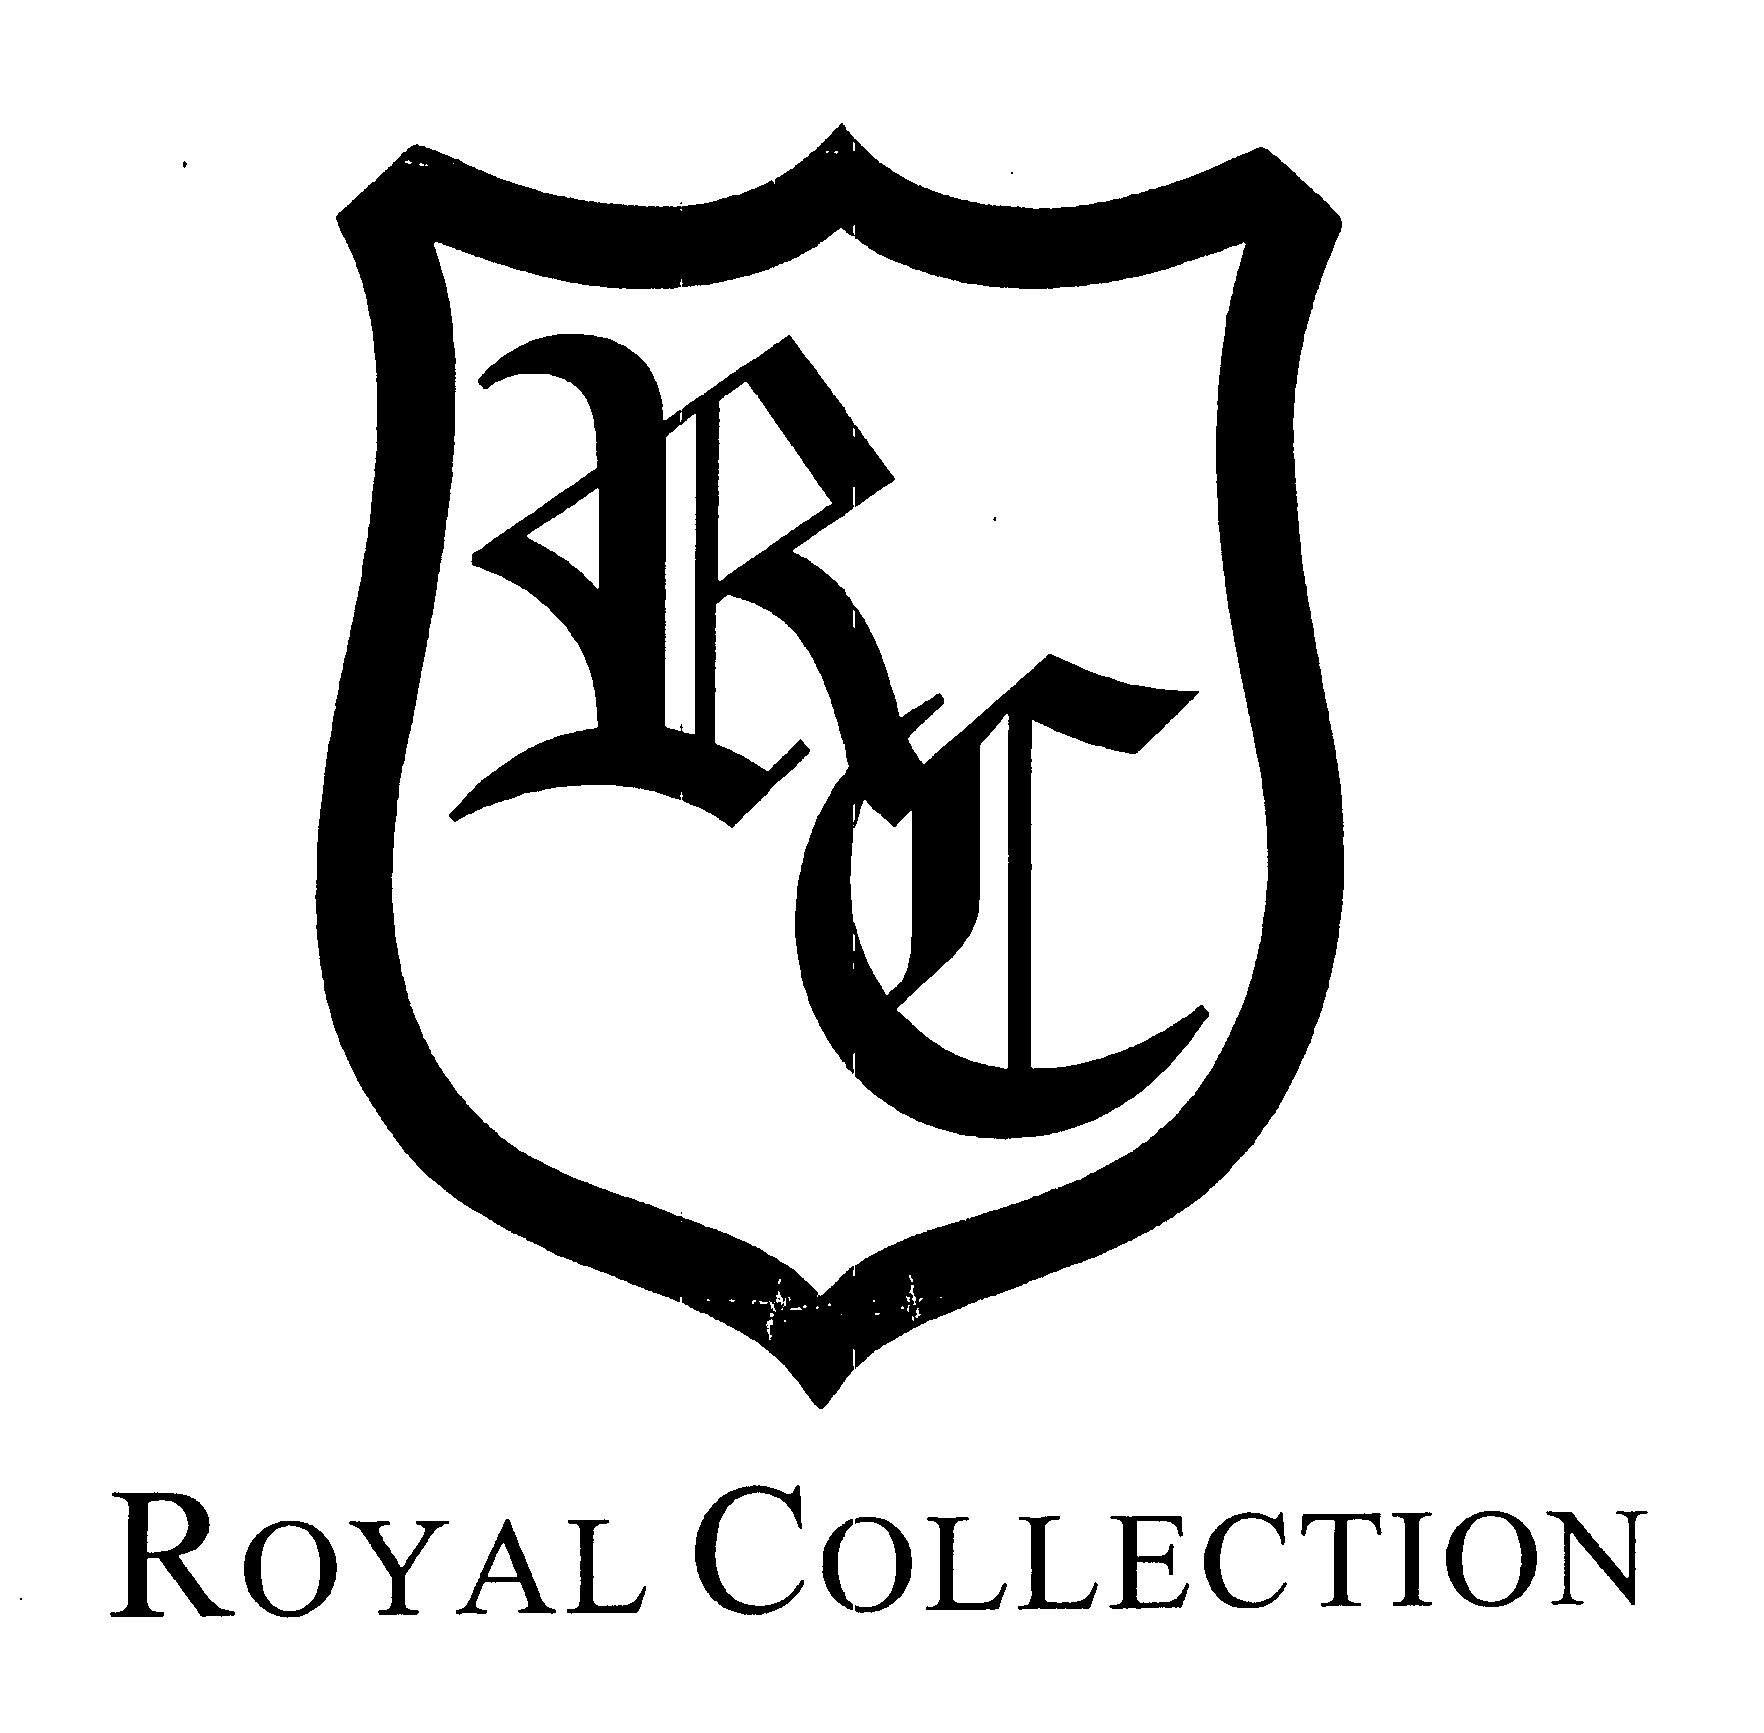  RC ROYAL COLLECTION